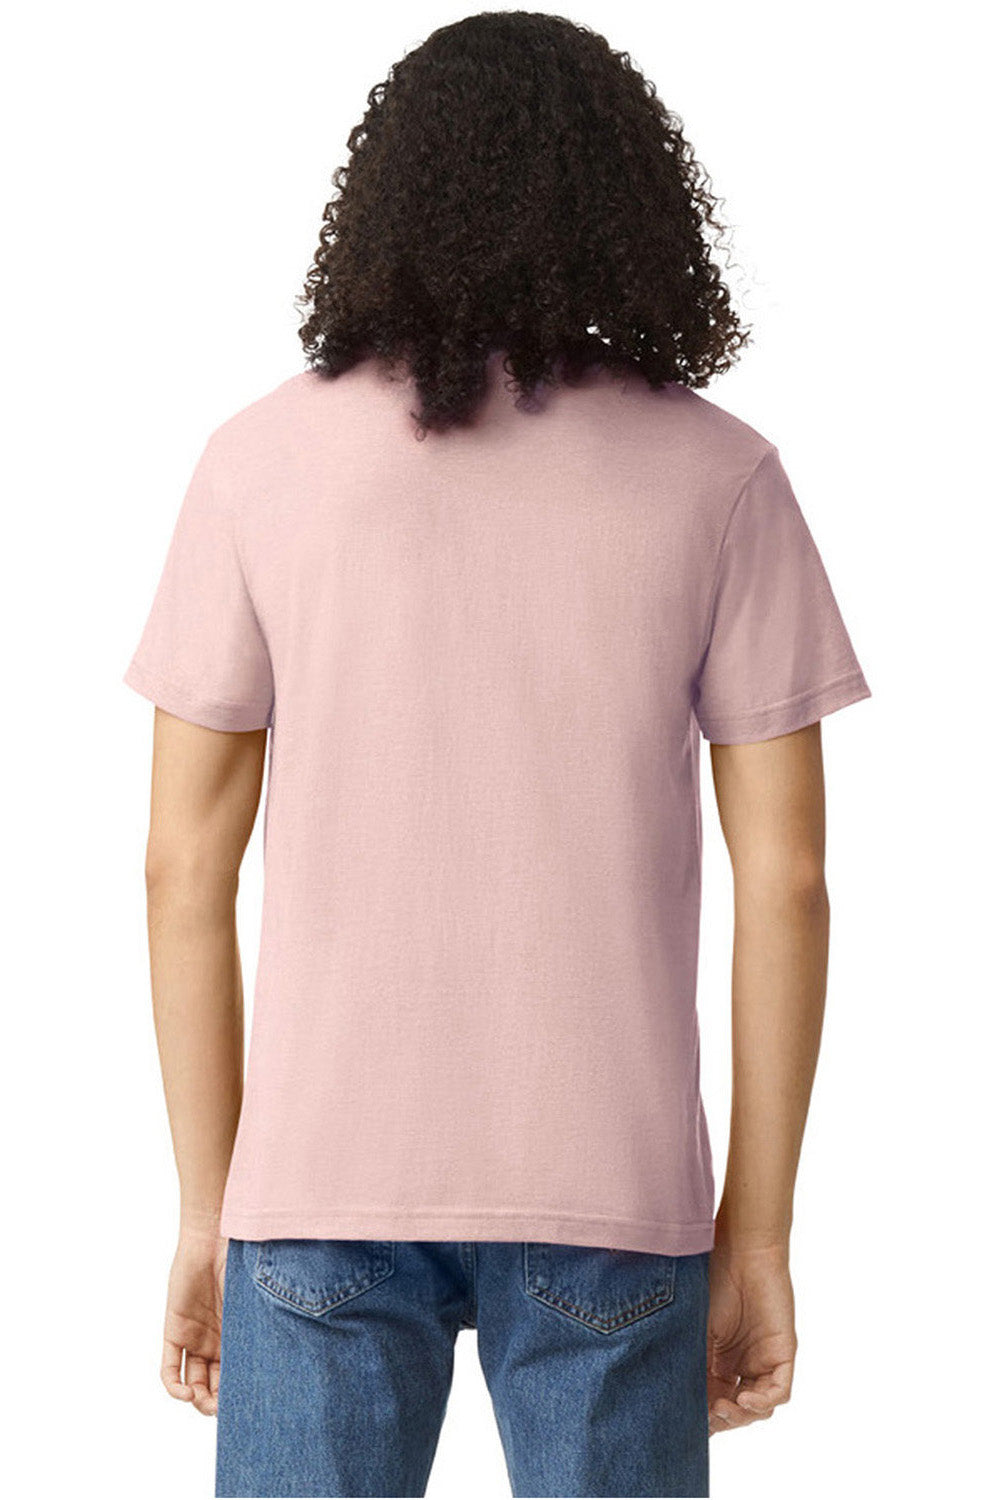 American Apparel 2001CVC Mens CVC Short Sleeve Crewneck T-Shirt Heather Blush Pink Model Back